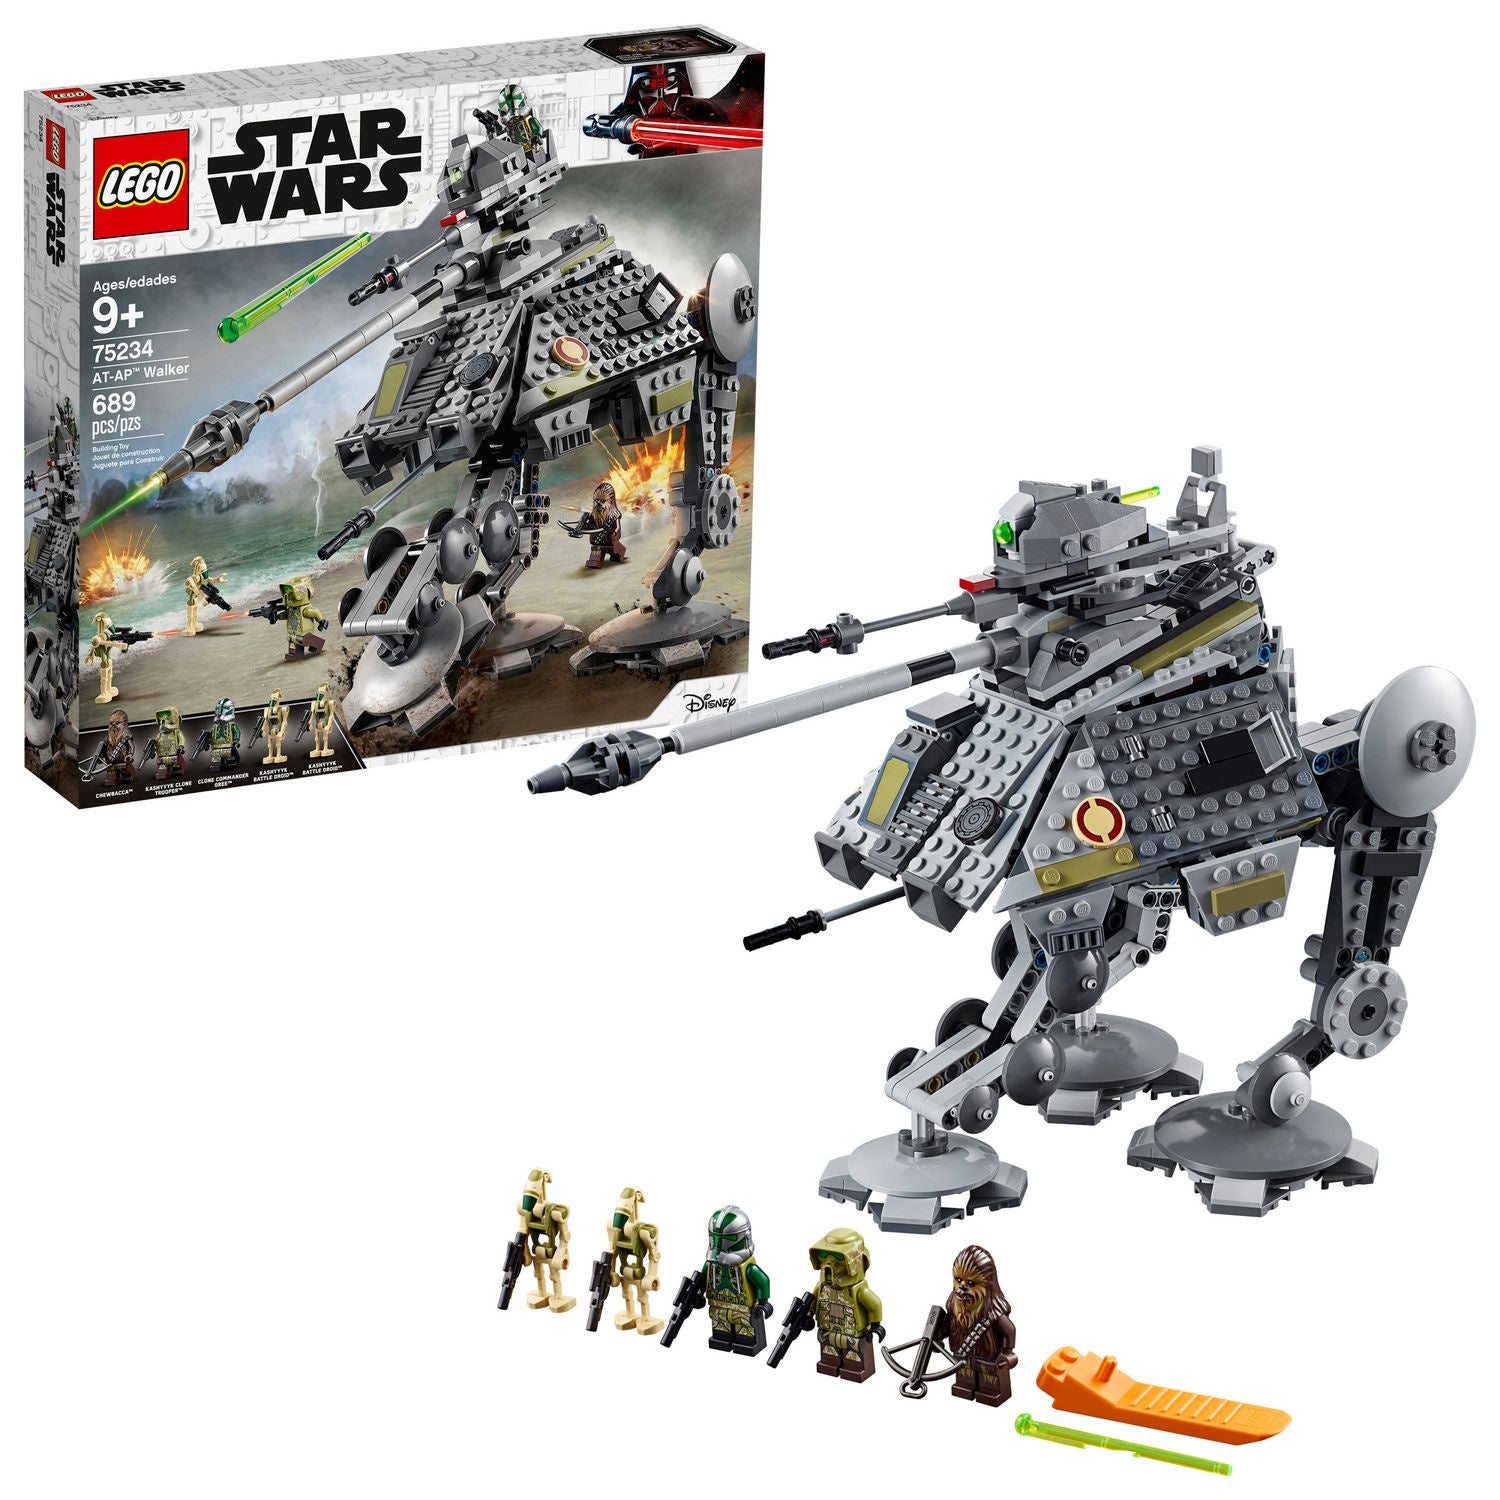 Lego Star Wars: AT-AP Walker 75234